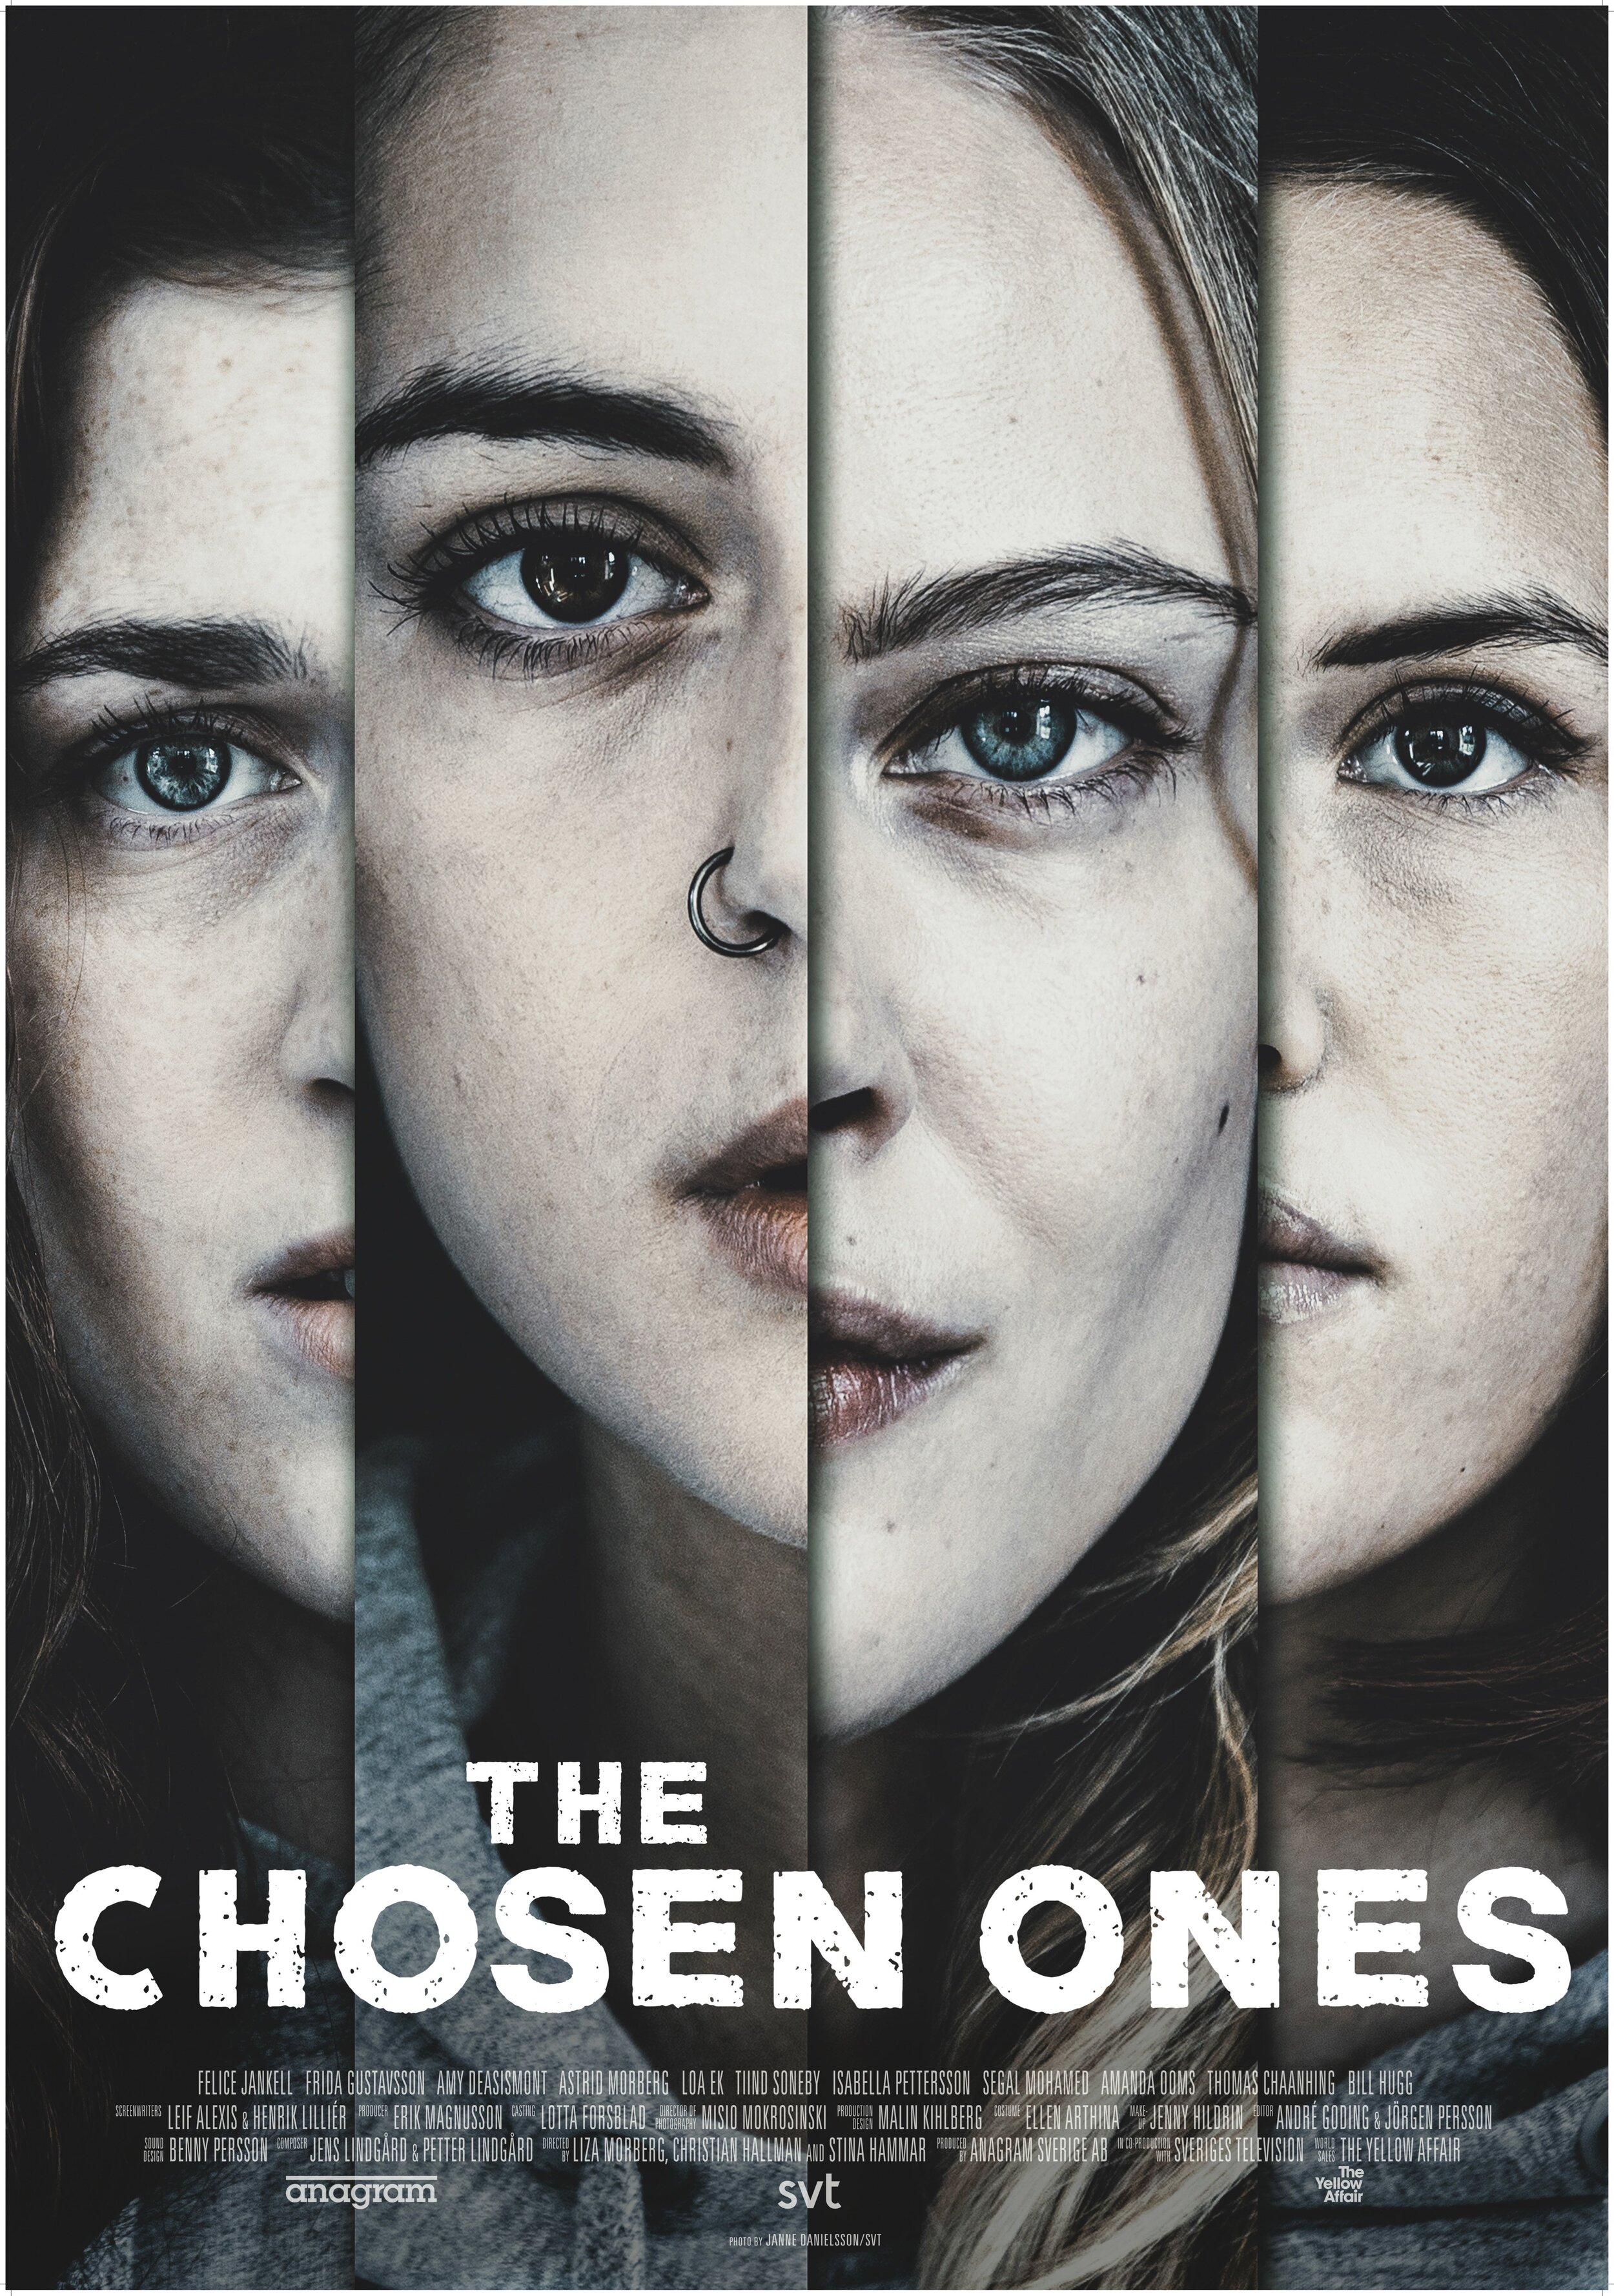 The Chosen Ones — THE YELLOW AFFAIR